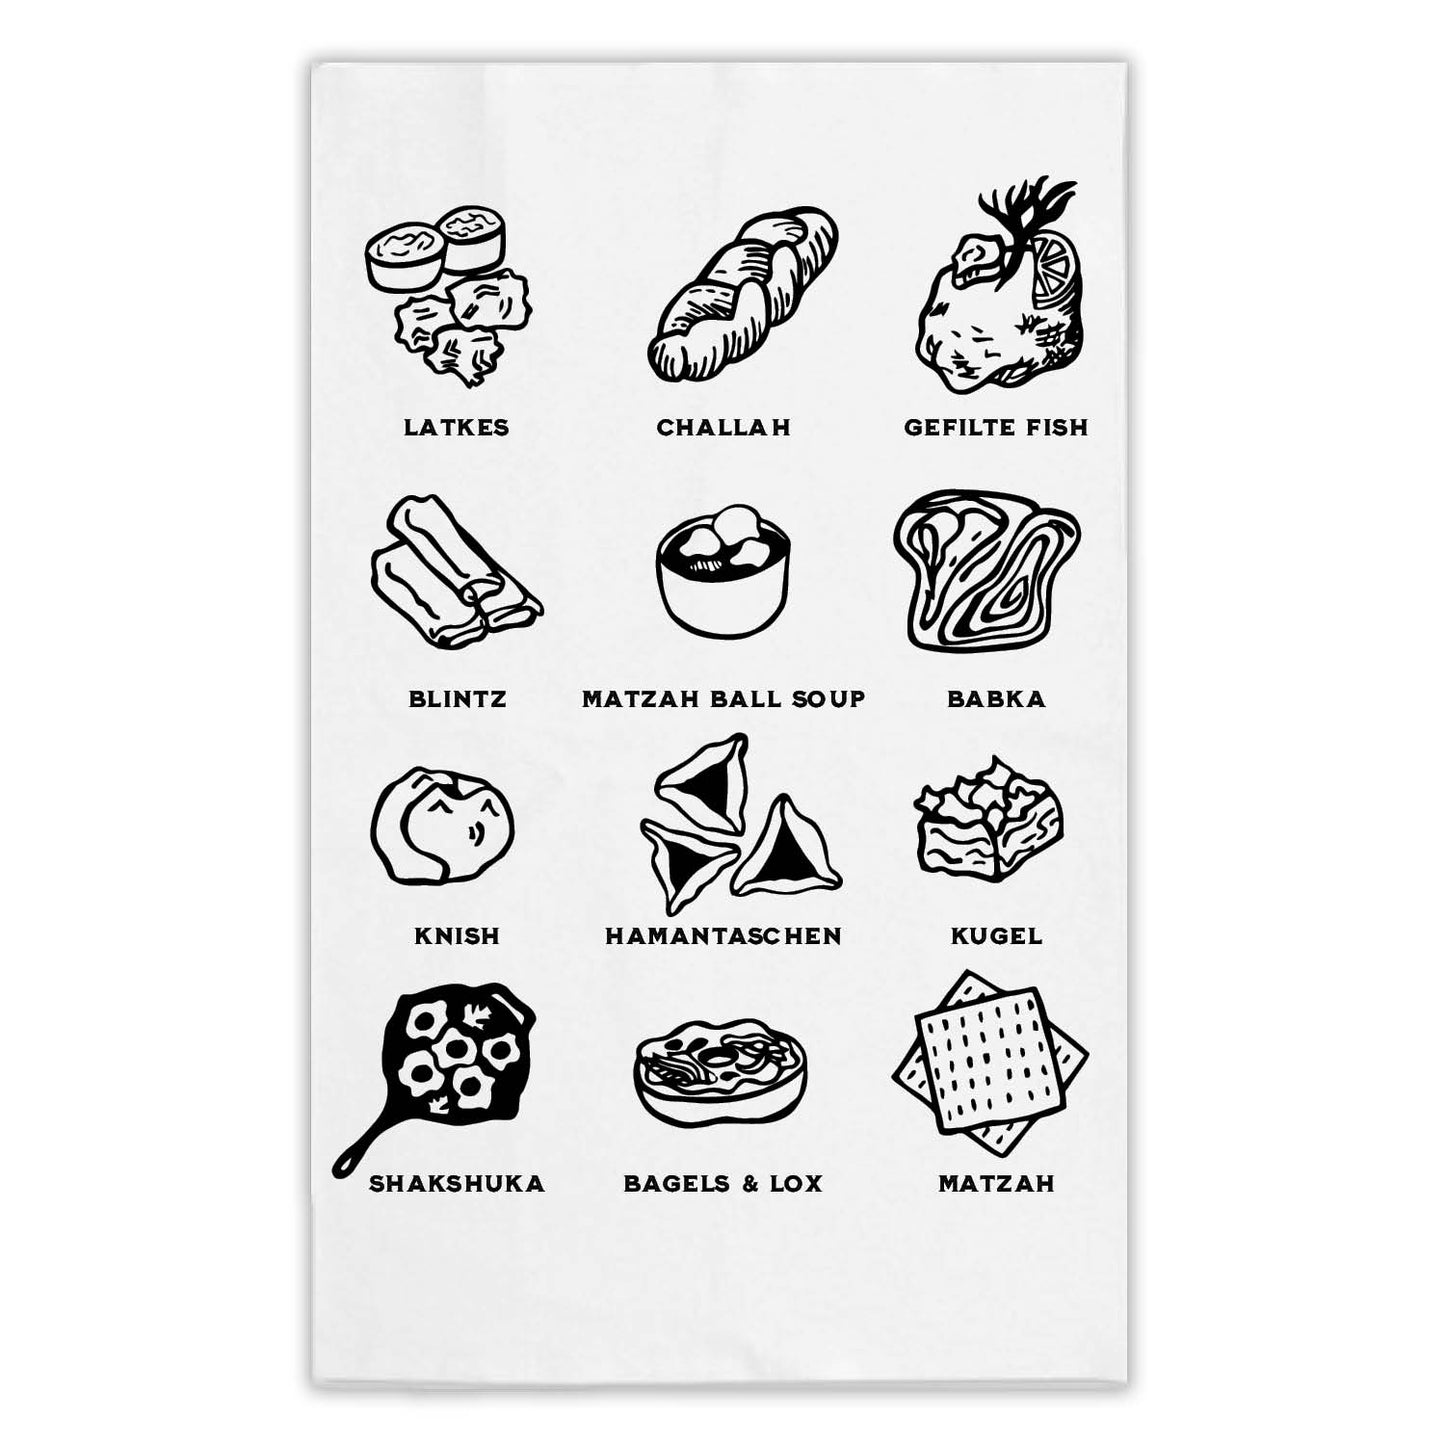 Jewish foods tea towel printed with latkes, challah bread, gefilte fish, blintz, matzah ball soup, babka, knish, hamantaschen, kugel, shakshuka, bagels and lox, and matzah